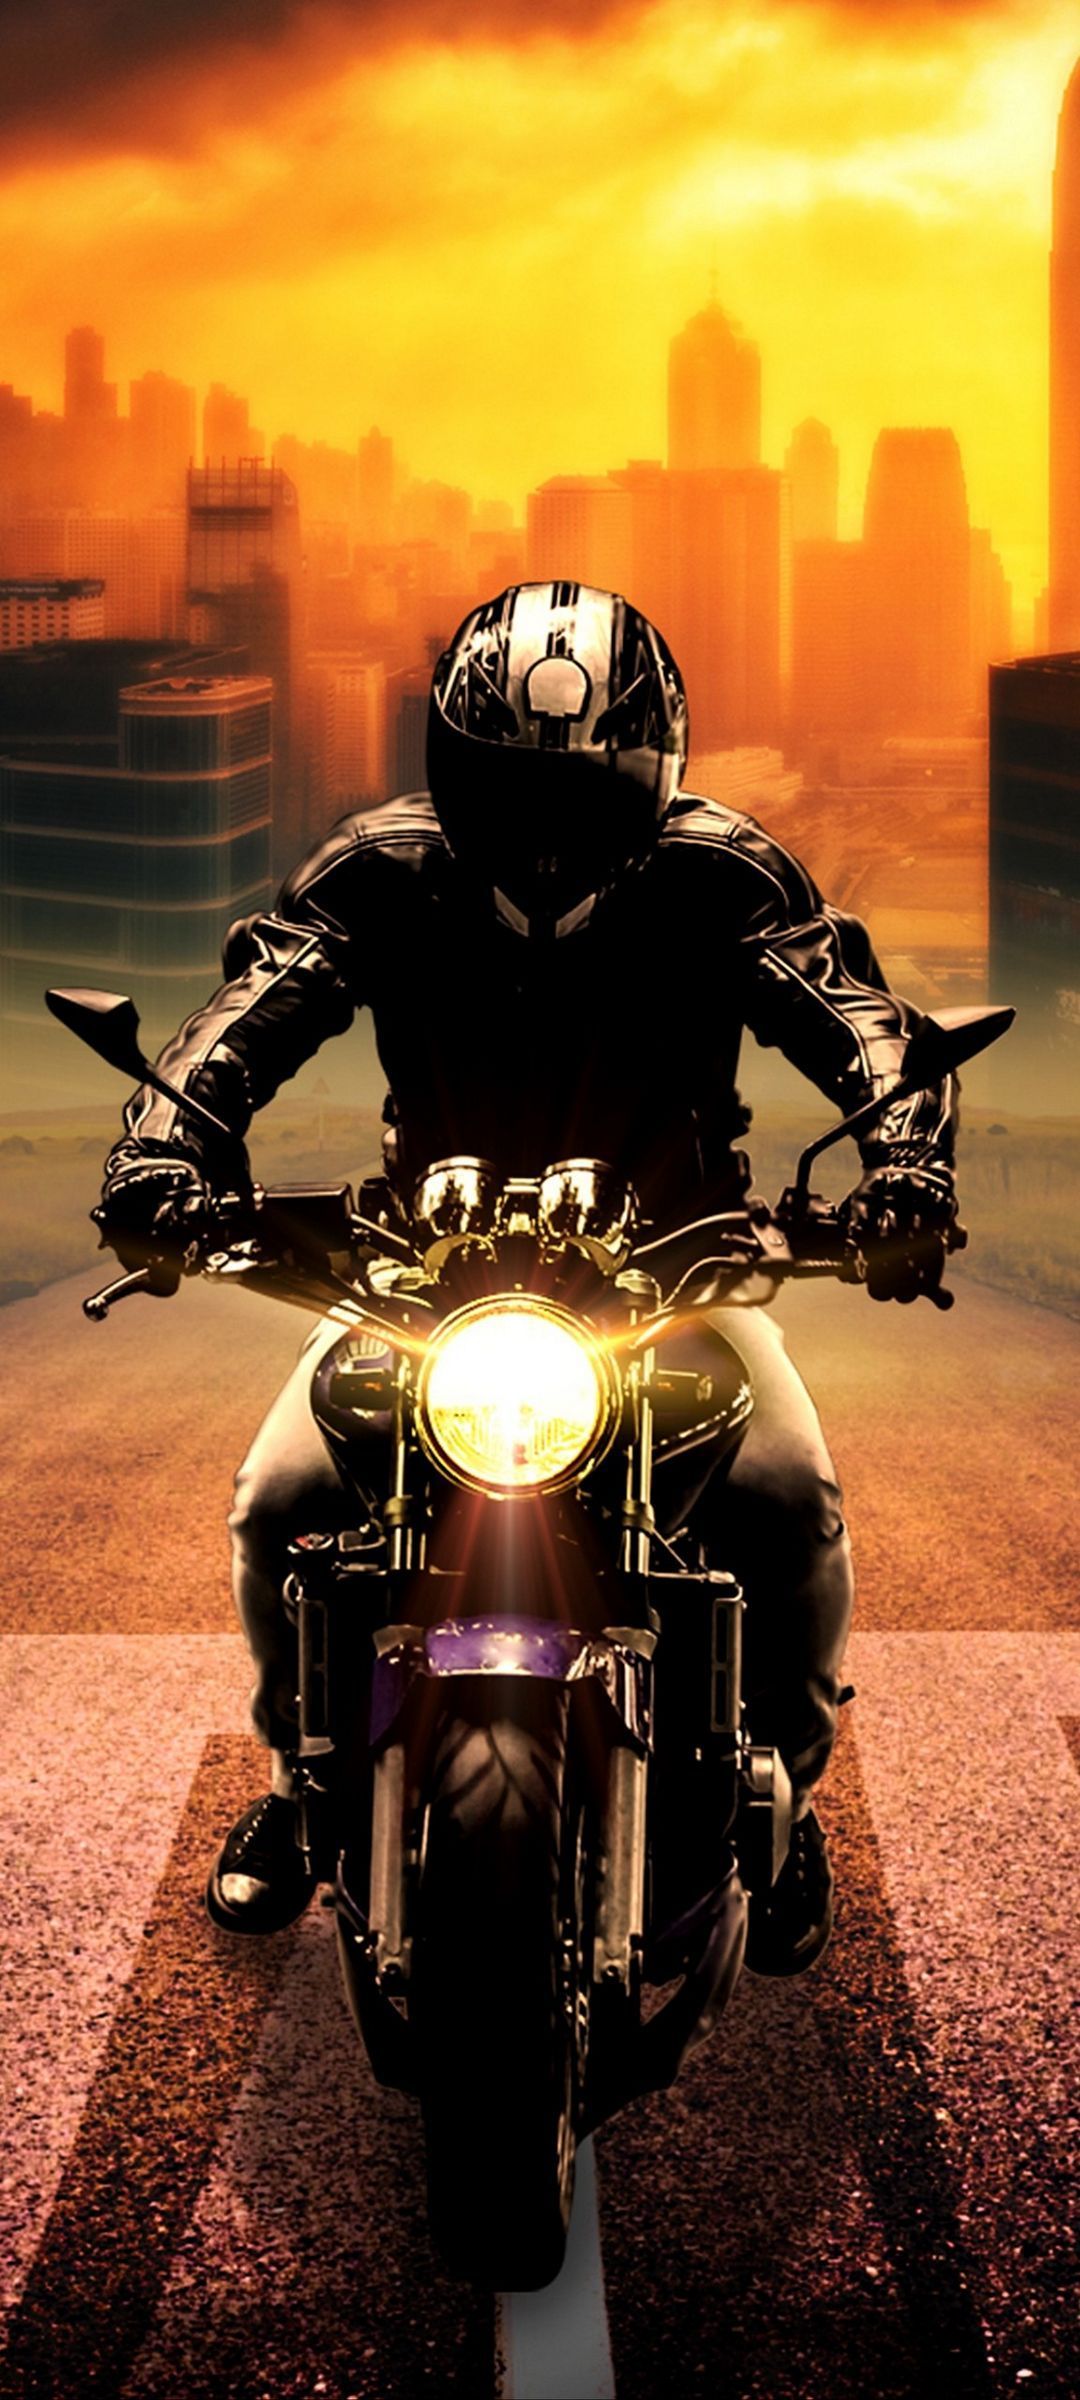 Samsung Galaxy A90 Wallpaper. Motorcycle wallpaper, Motorcycle, Cool motorcycle helmets